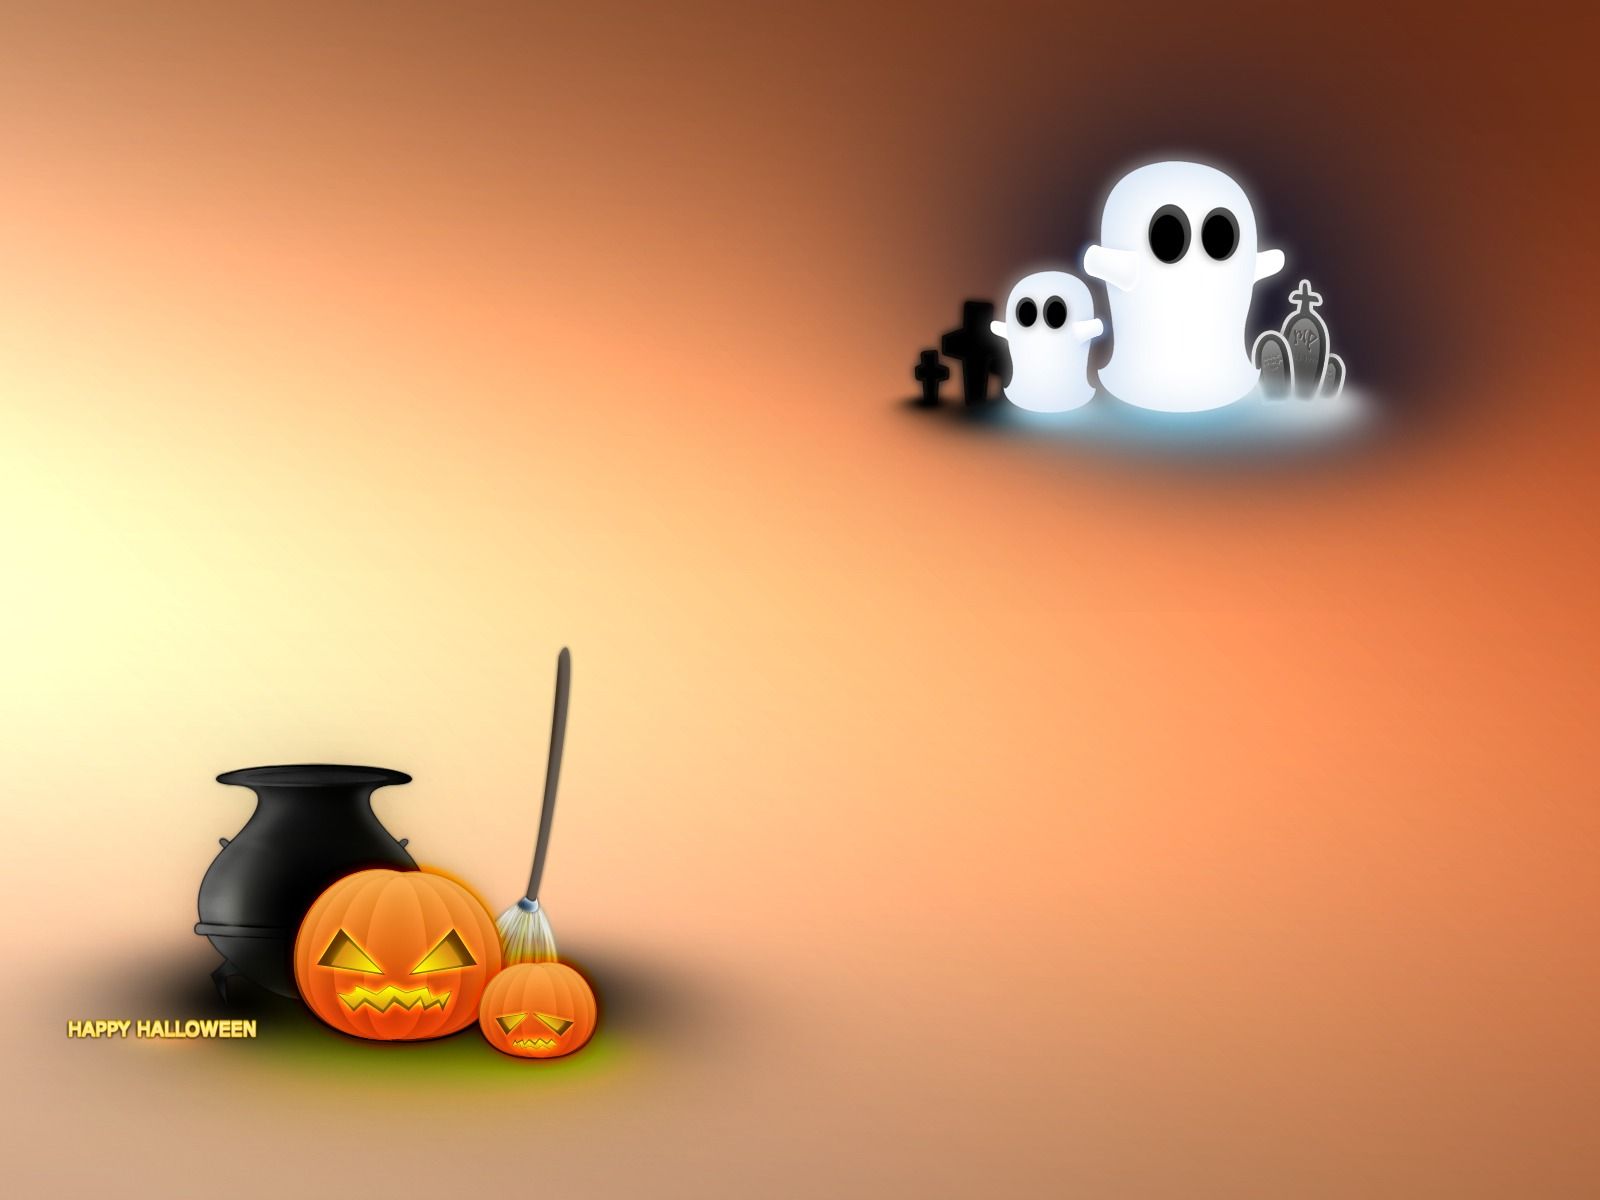 Happy Halloween Wallpaper Halloween Holidays Wallpaper in jpg format for free download